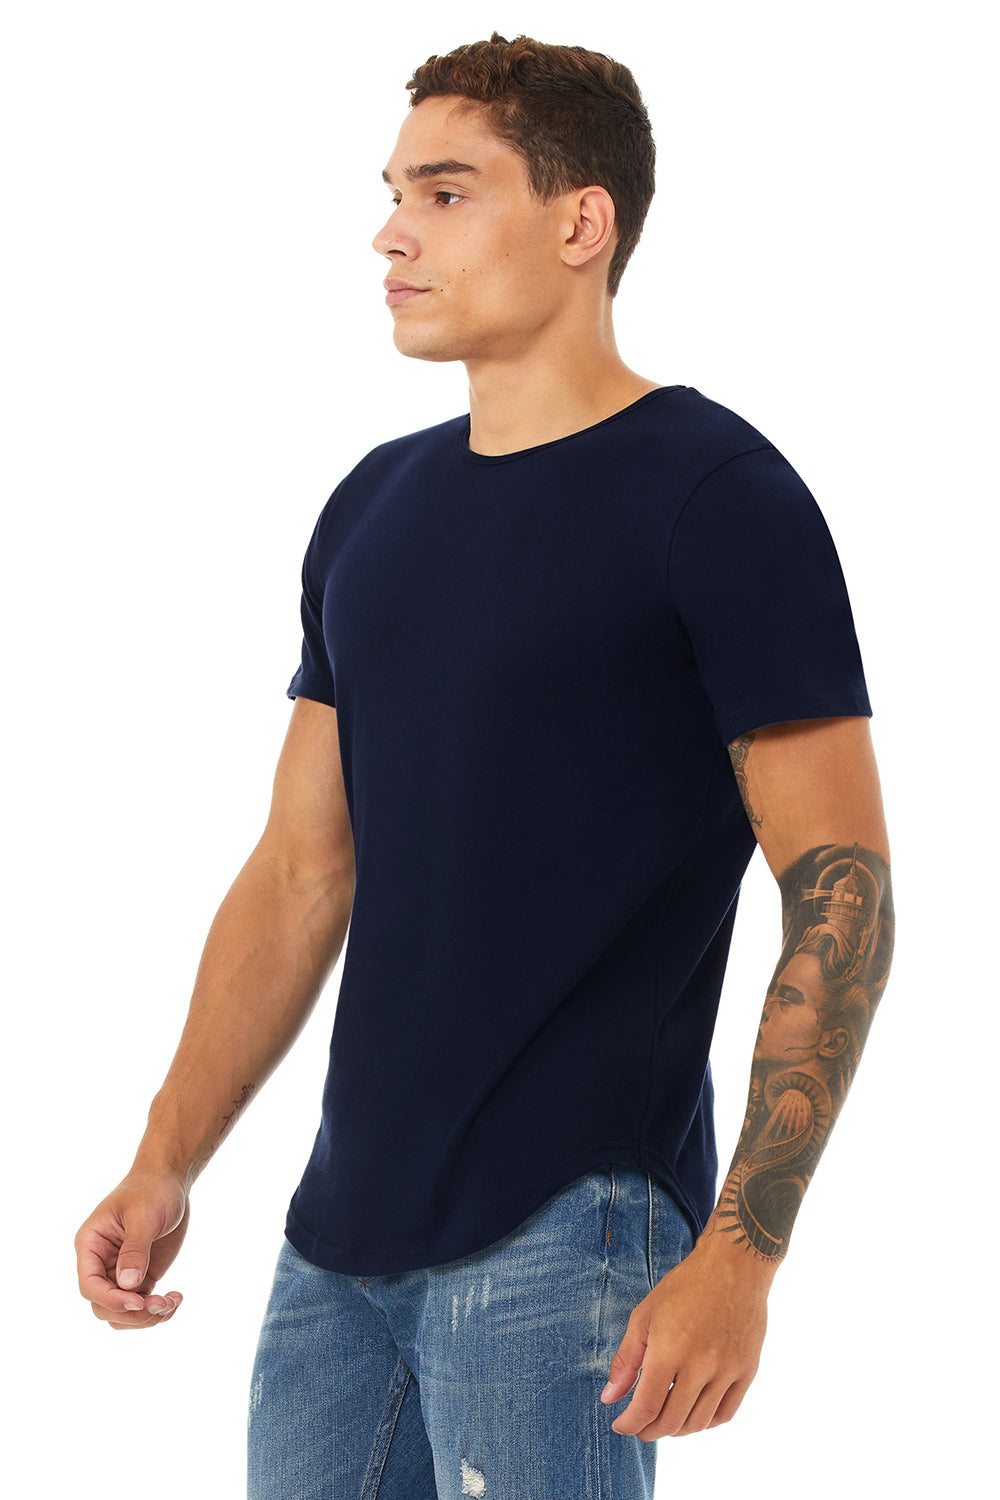 Bella + Canvas 3003C Mens Curved Hem Short Sleeve Crewneck T-Shirt Navy Blue Model 3Q